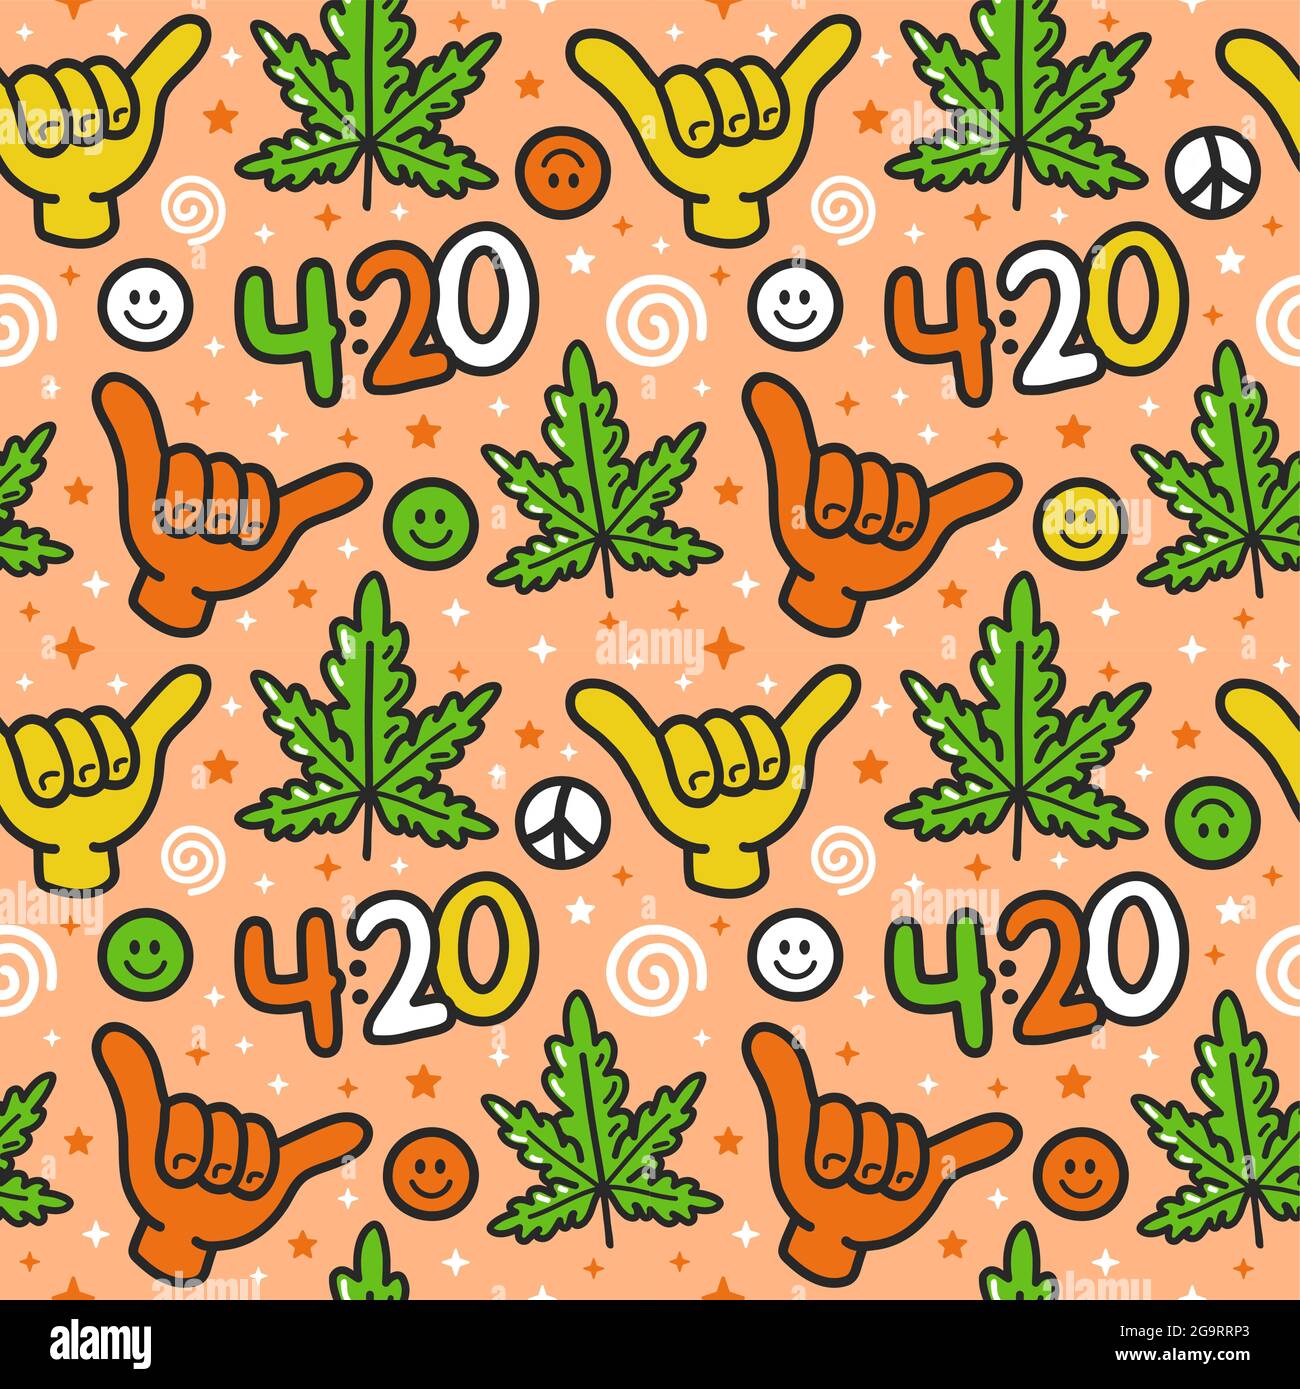 Funny weed marijuana, shaka gesture,420 seamless pattern. Vector hand drawn doodle outline cartoon kawaii character illustration. Trippy,weed,420, shaka, cannabis leaf cartoon seamless pattern concept Stock Vector